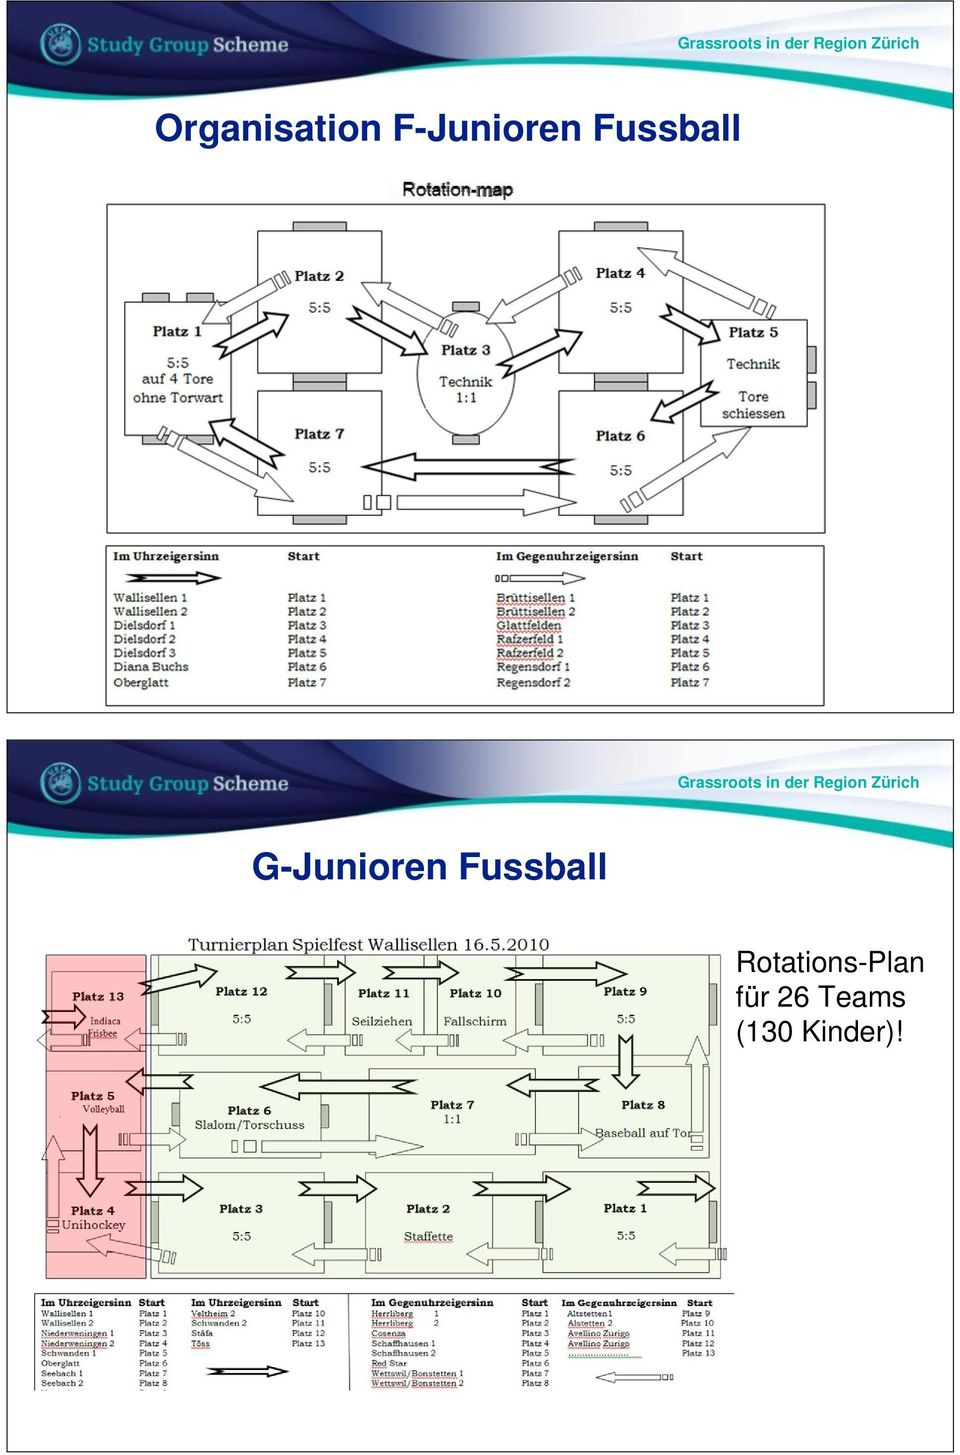 G-Junioren Fussball Rotations-Plan für